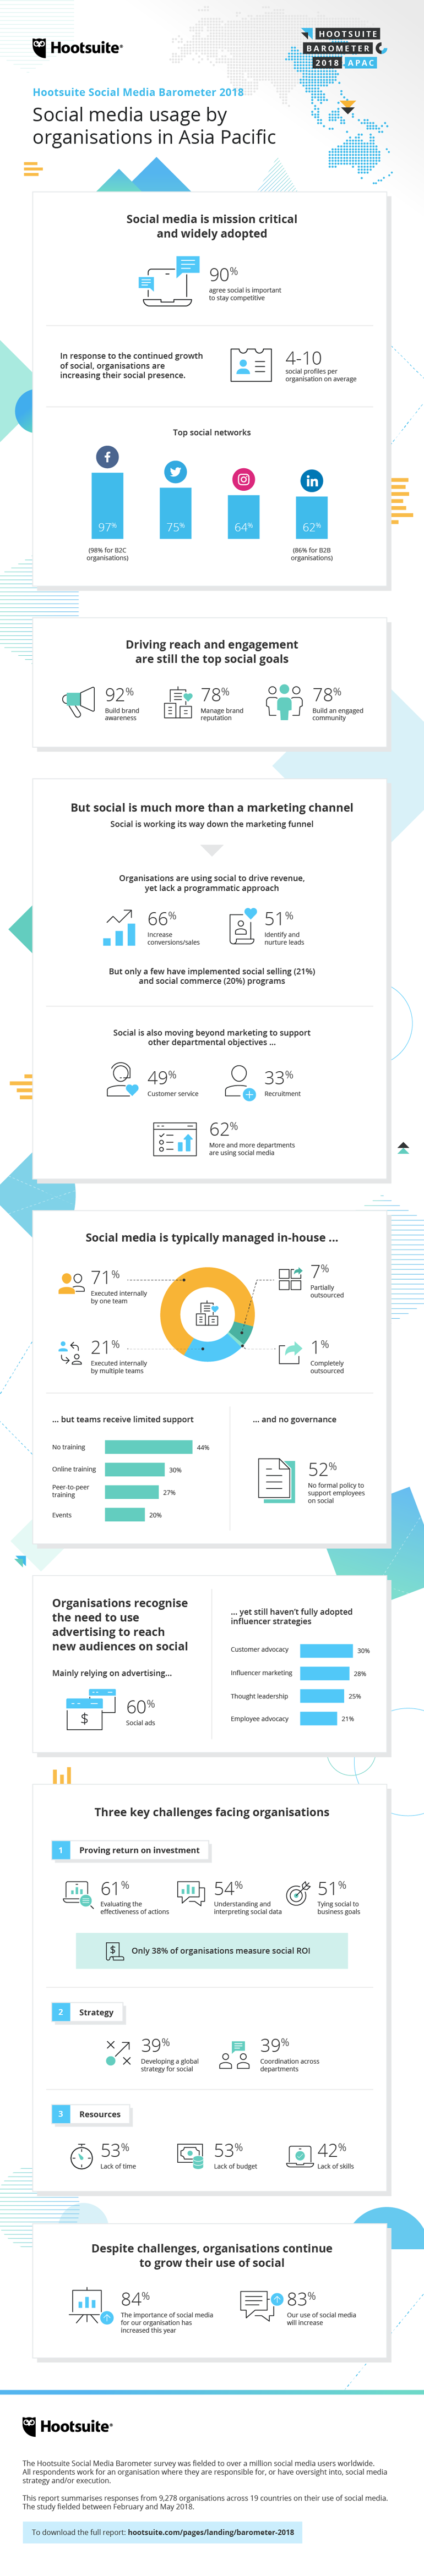 Hootsuite Social Media Barometer APAC Infographic